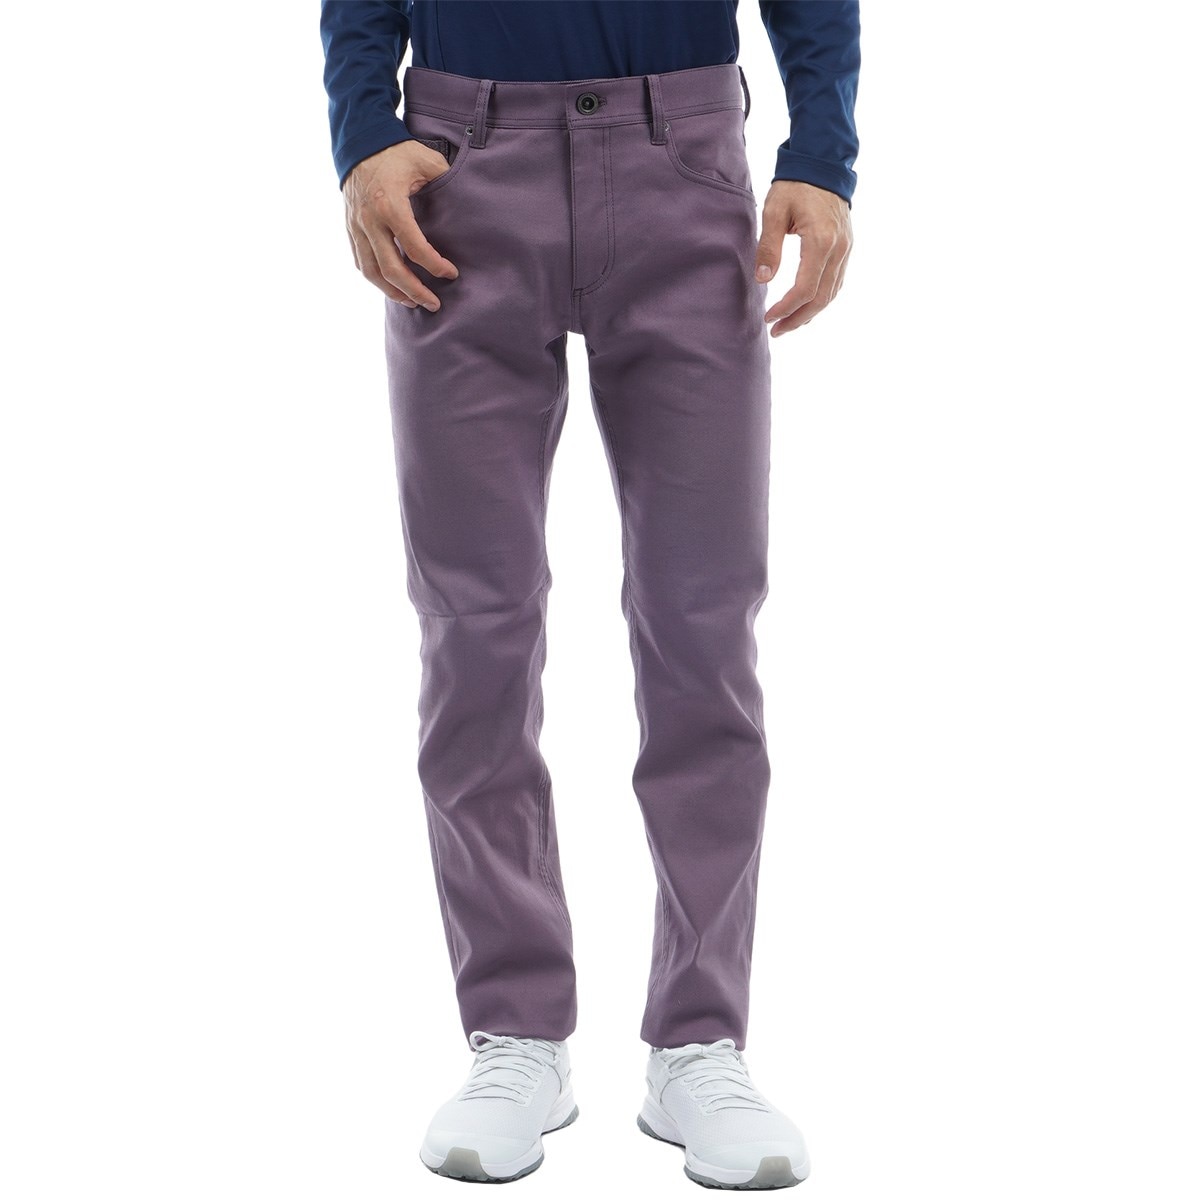 PUMA ゴルフウェア キュロットスカート Lサイズ コーデュロイ 紫